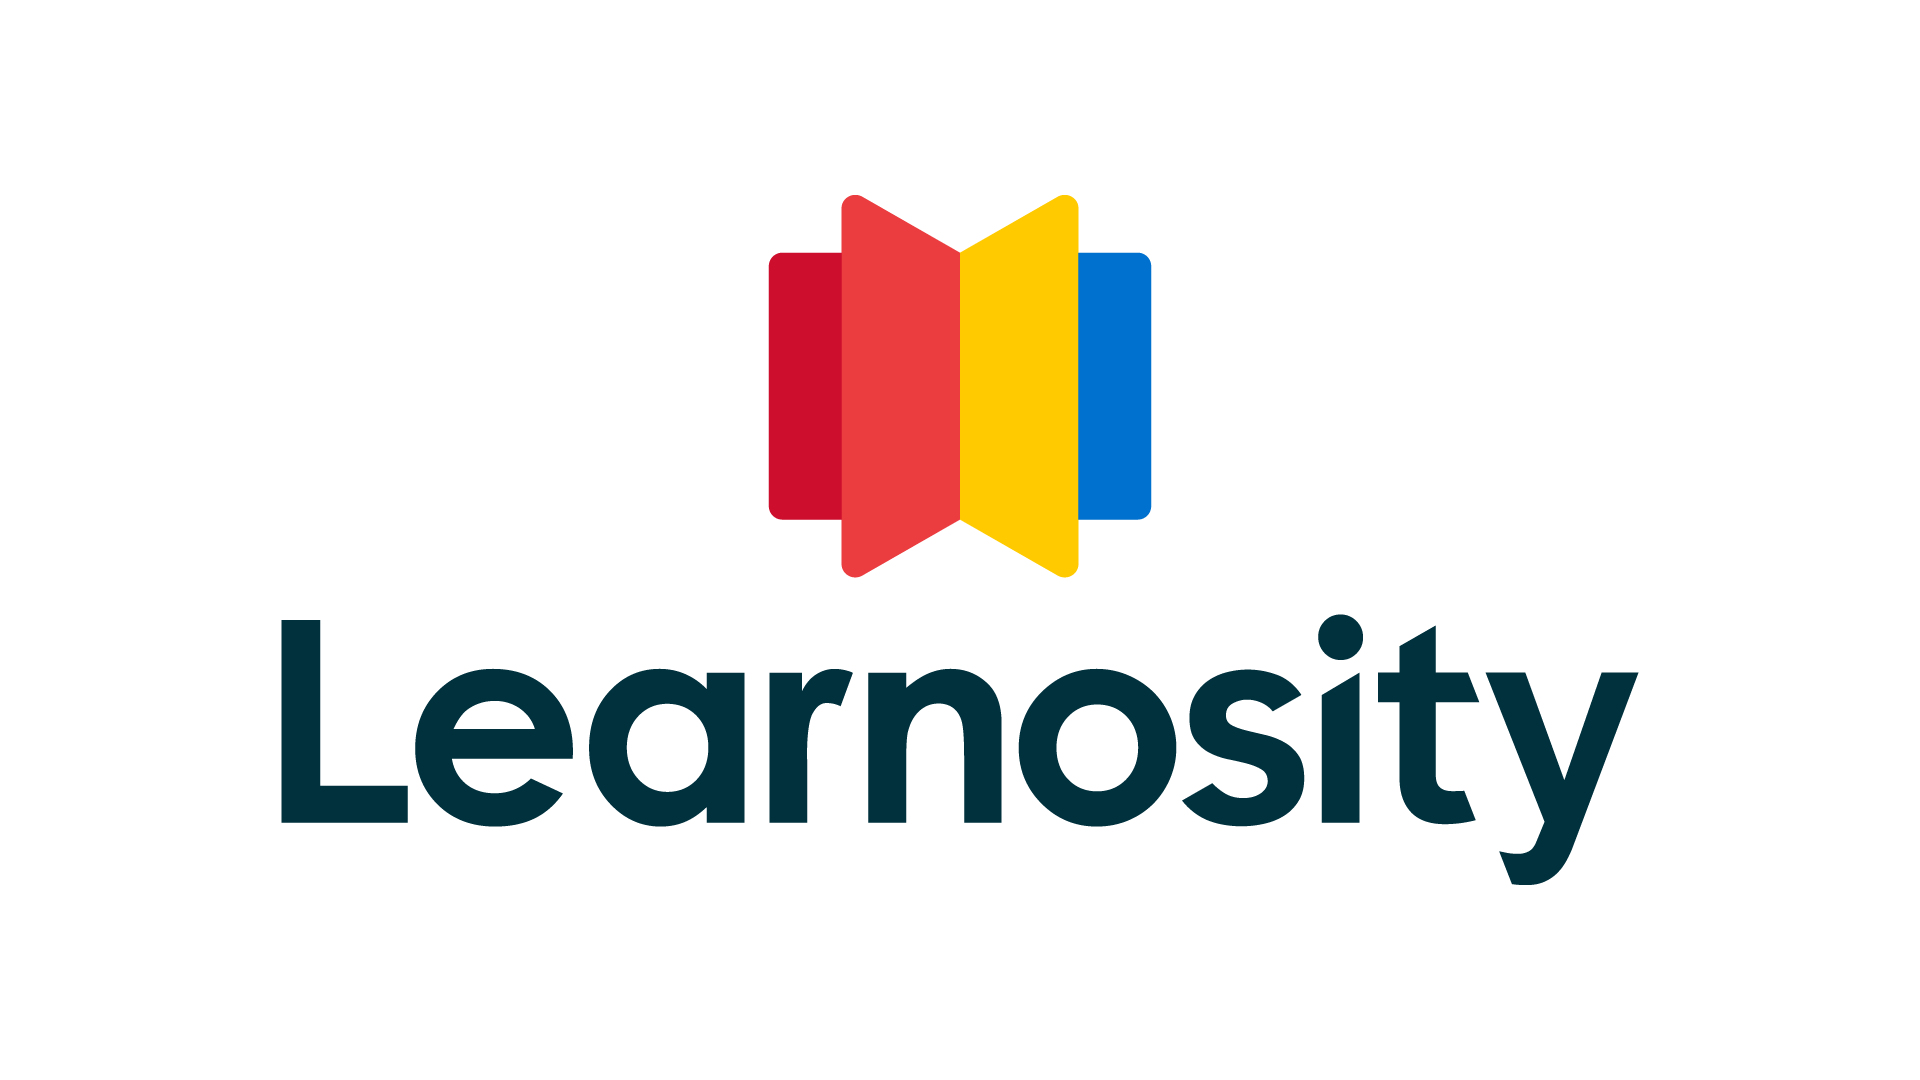 learnosity logo